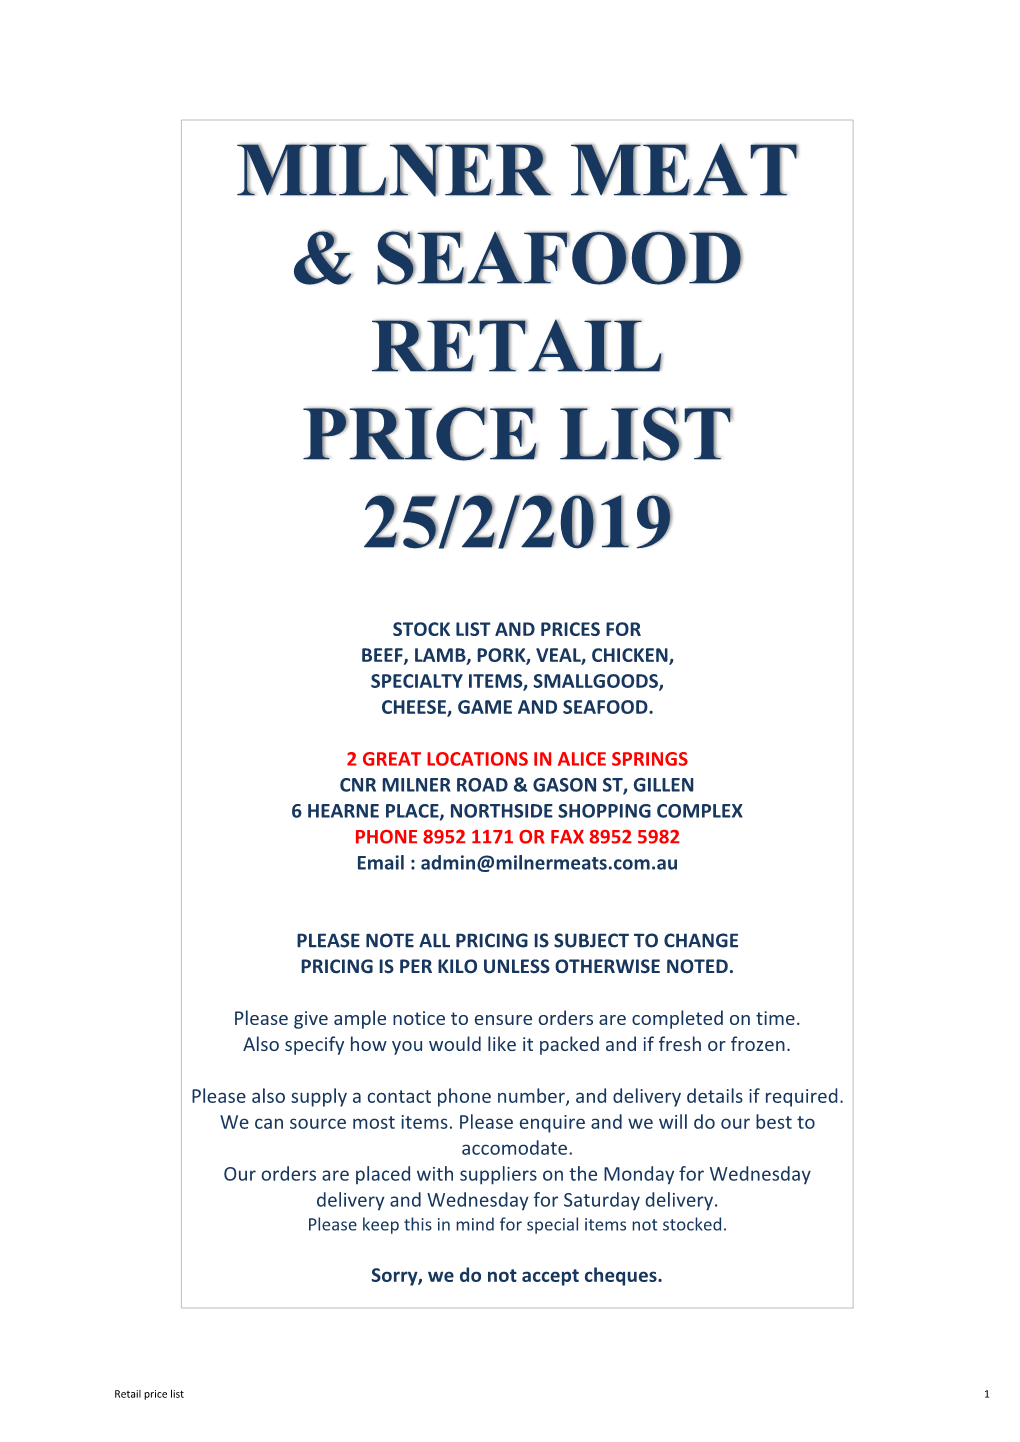 Milner Meat & Seafood Retail Price List 25/2/2019